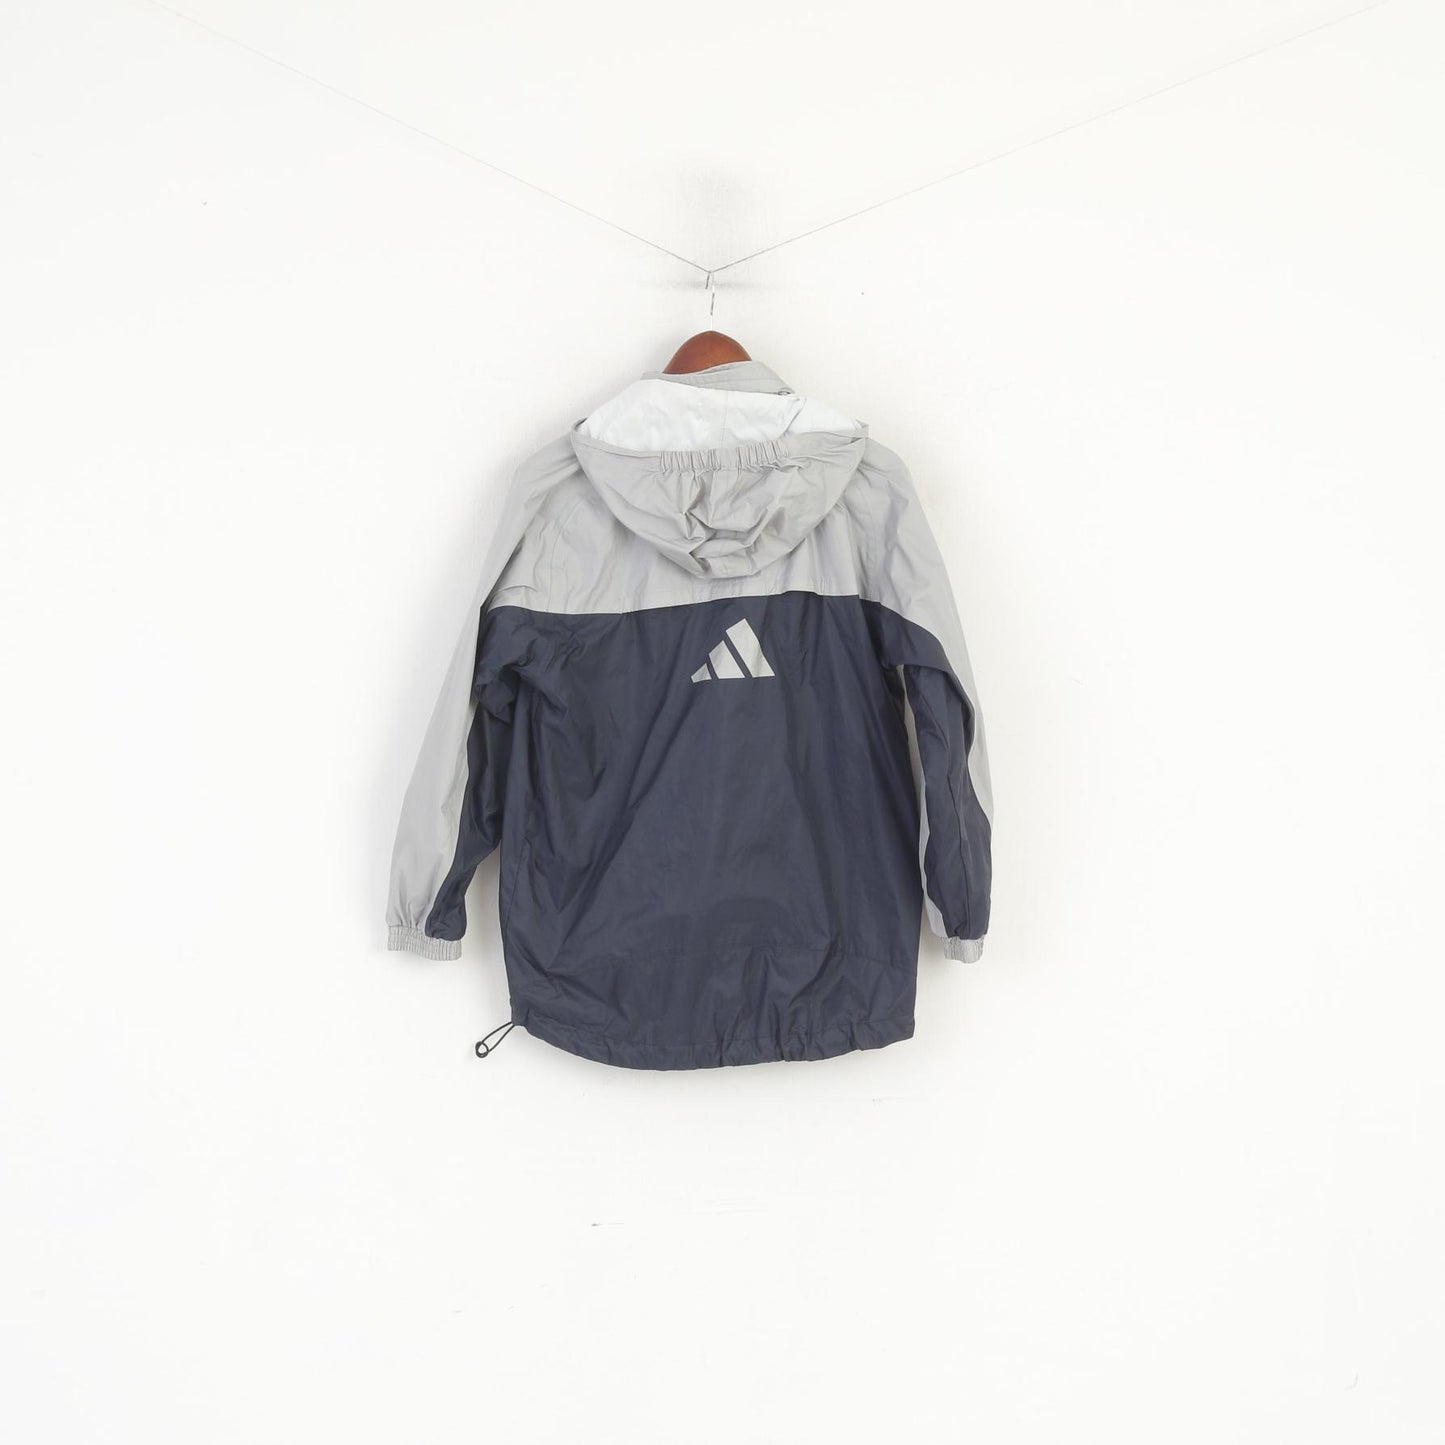 Adidas Boys 14 Age 164 Jacket Navy Grey Nylon Rainproof Hooded Zip Up Top